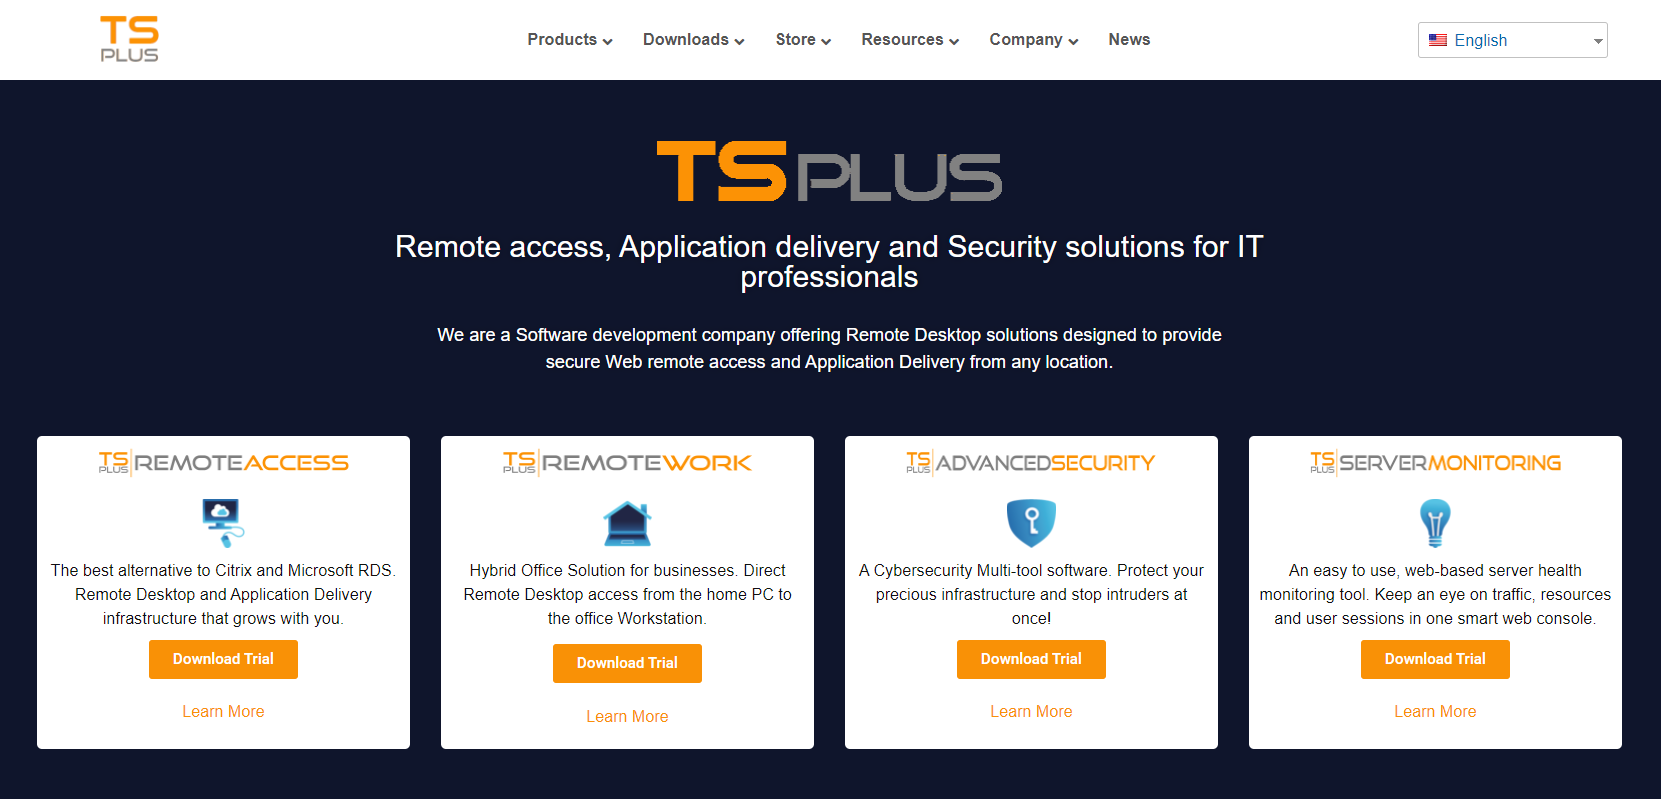 TSPLUS. ТС плюс. TSPLUS Remote access Enterprise Edition. Access solutions